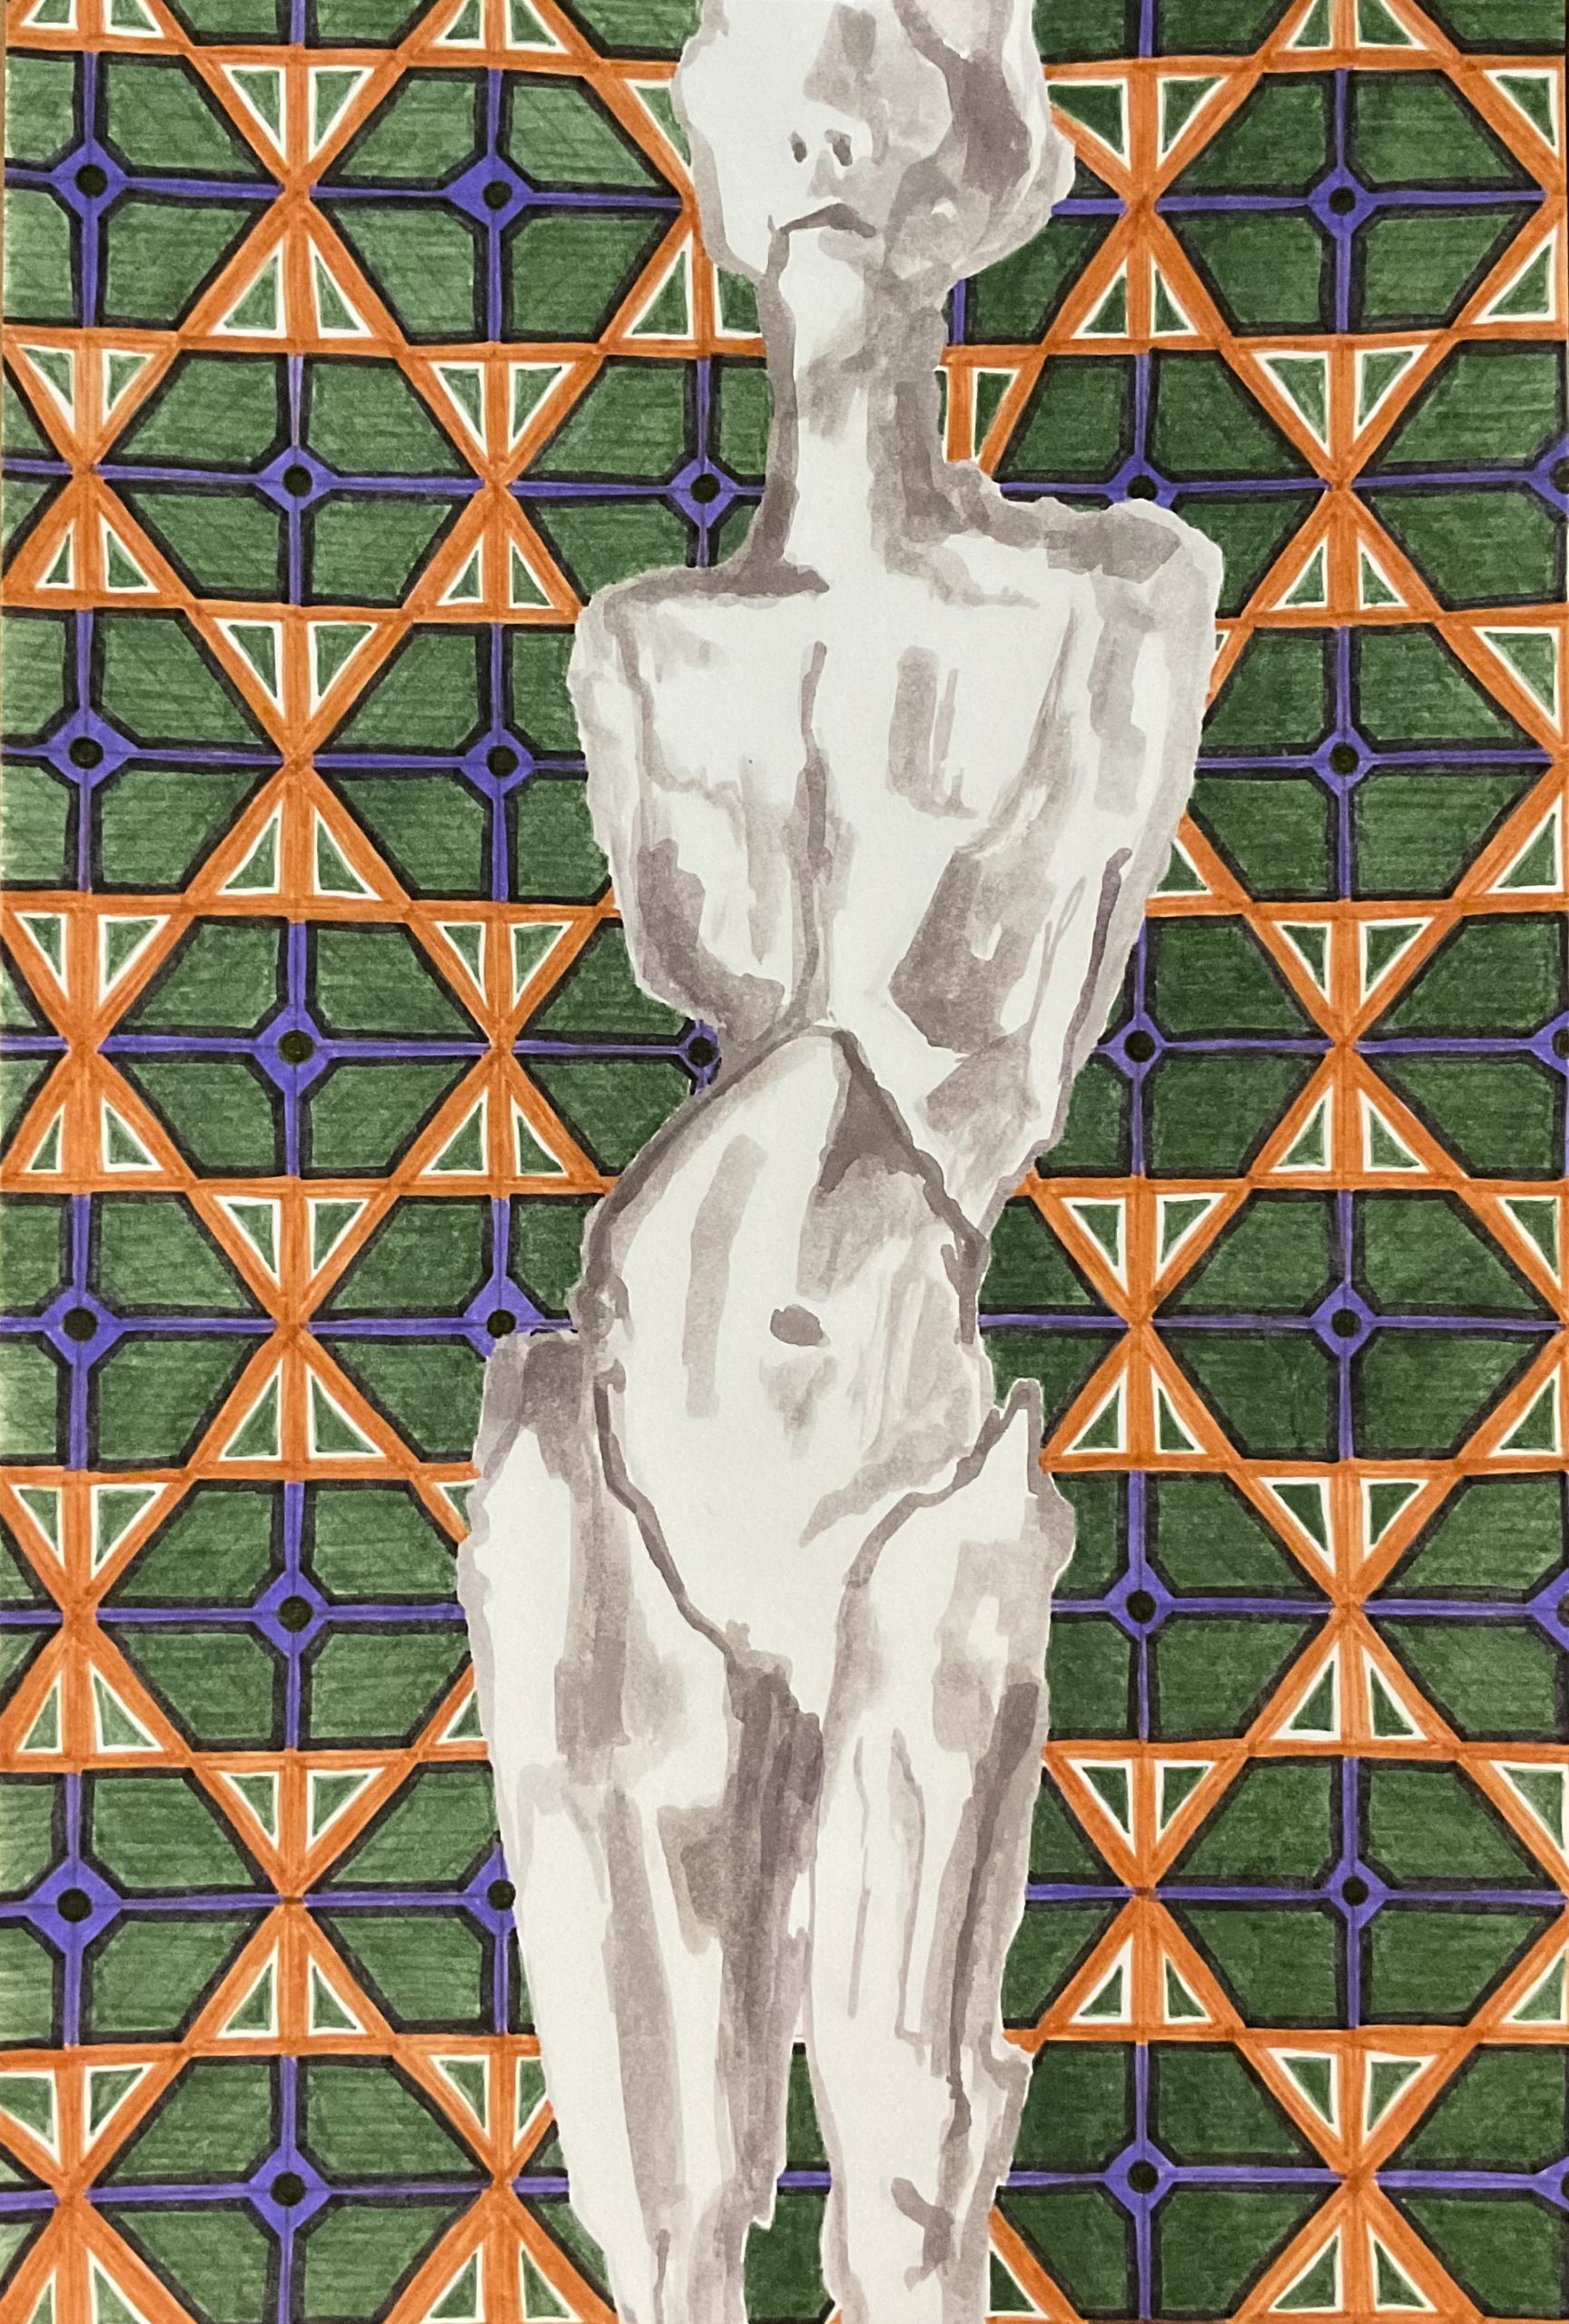 watercolour figure and tessellated background in marker, green, purple, orange geometric pattern